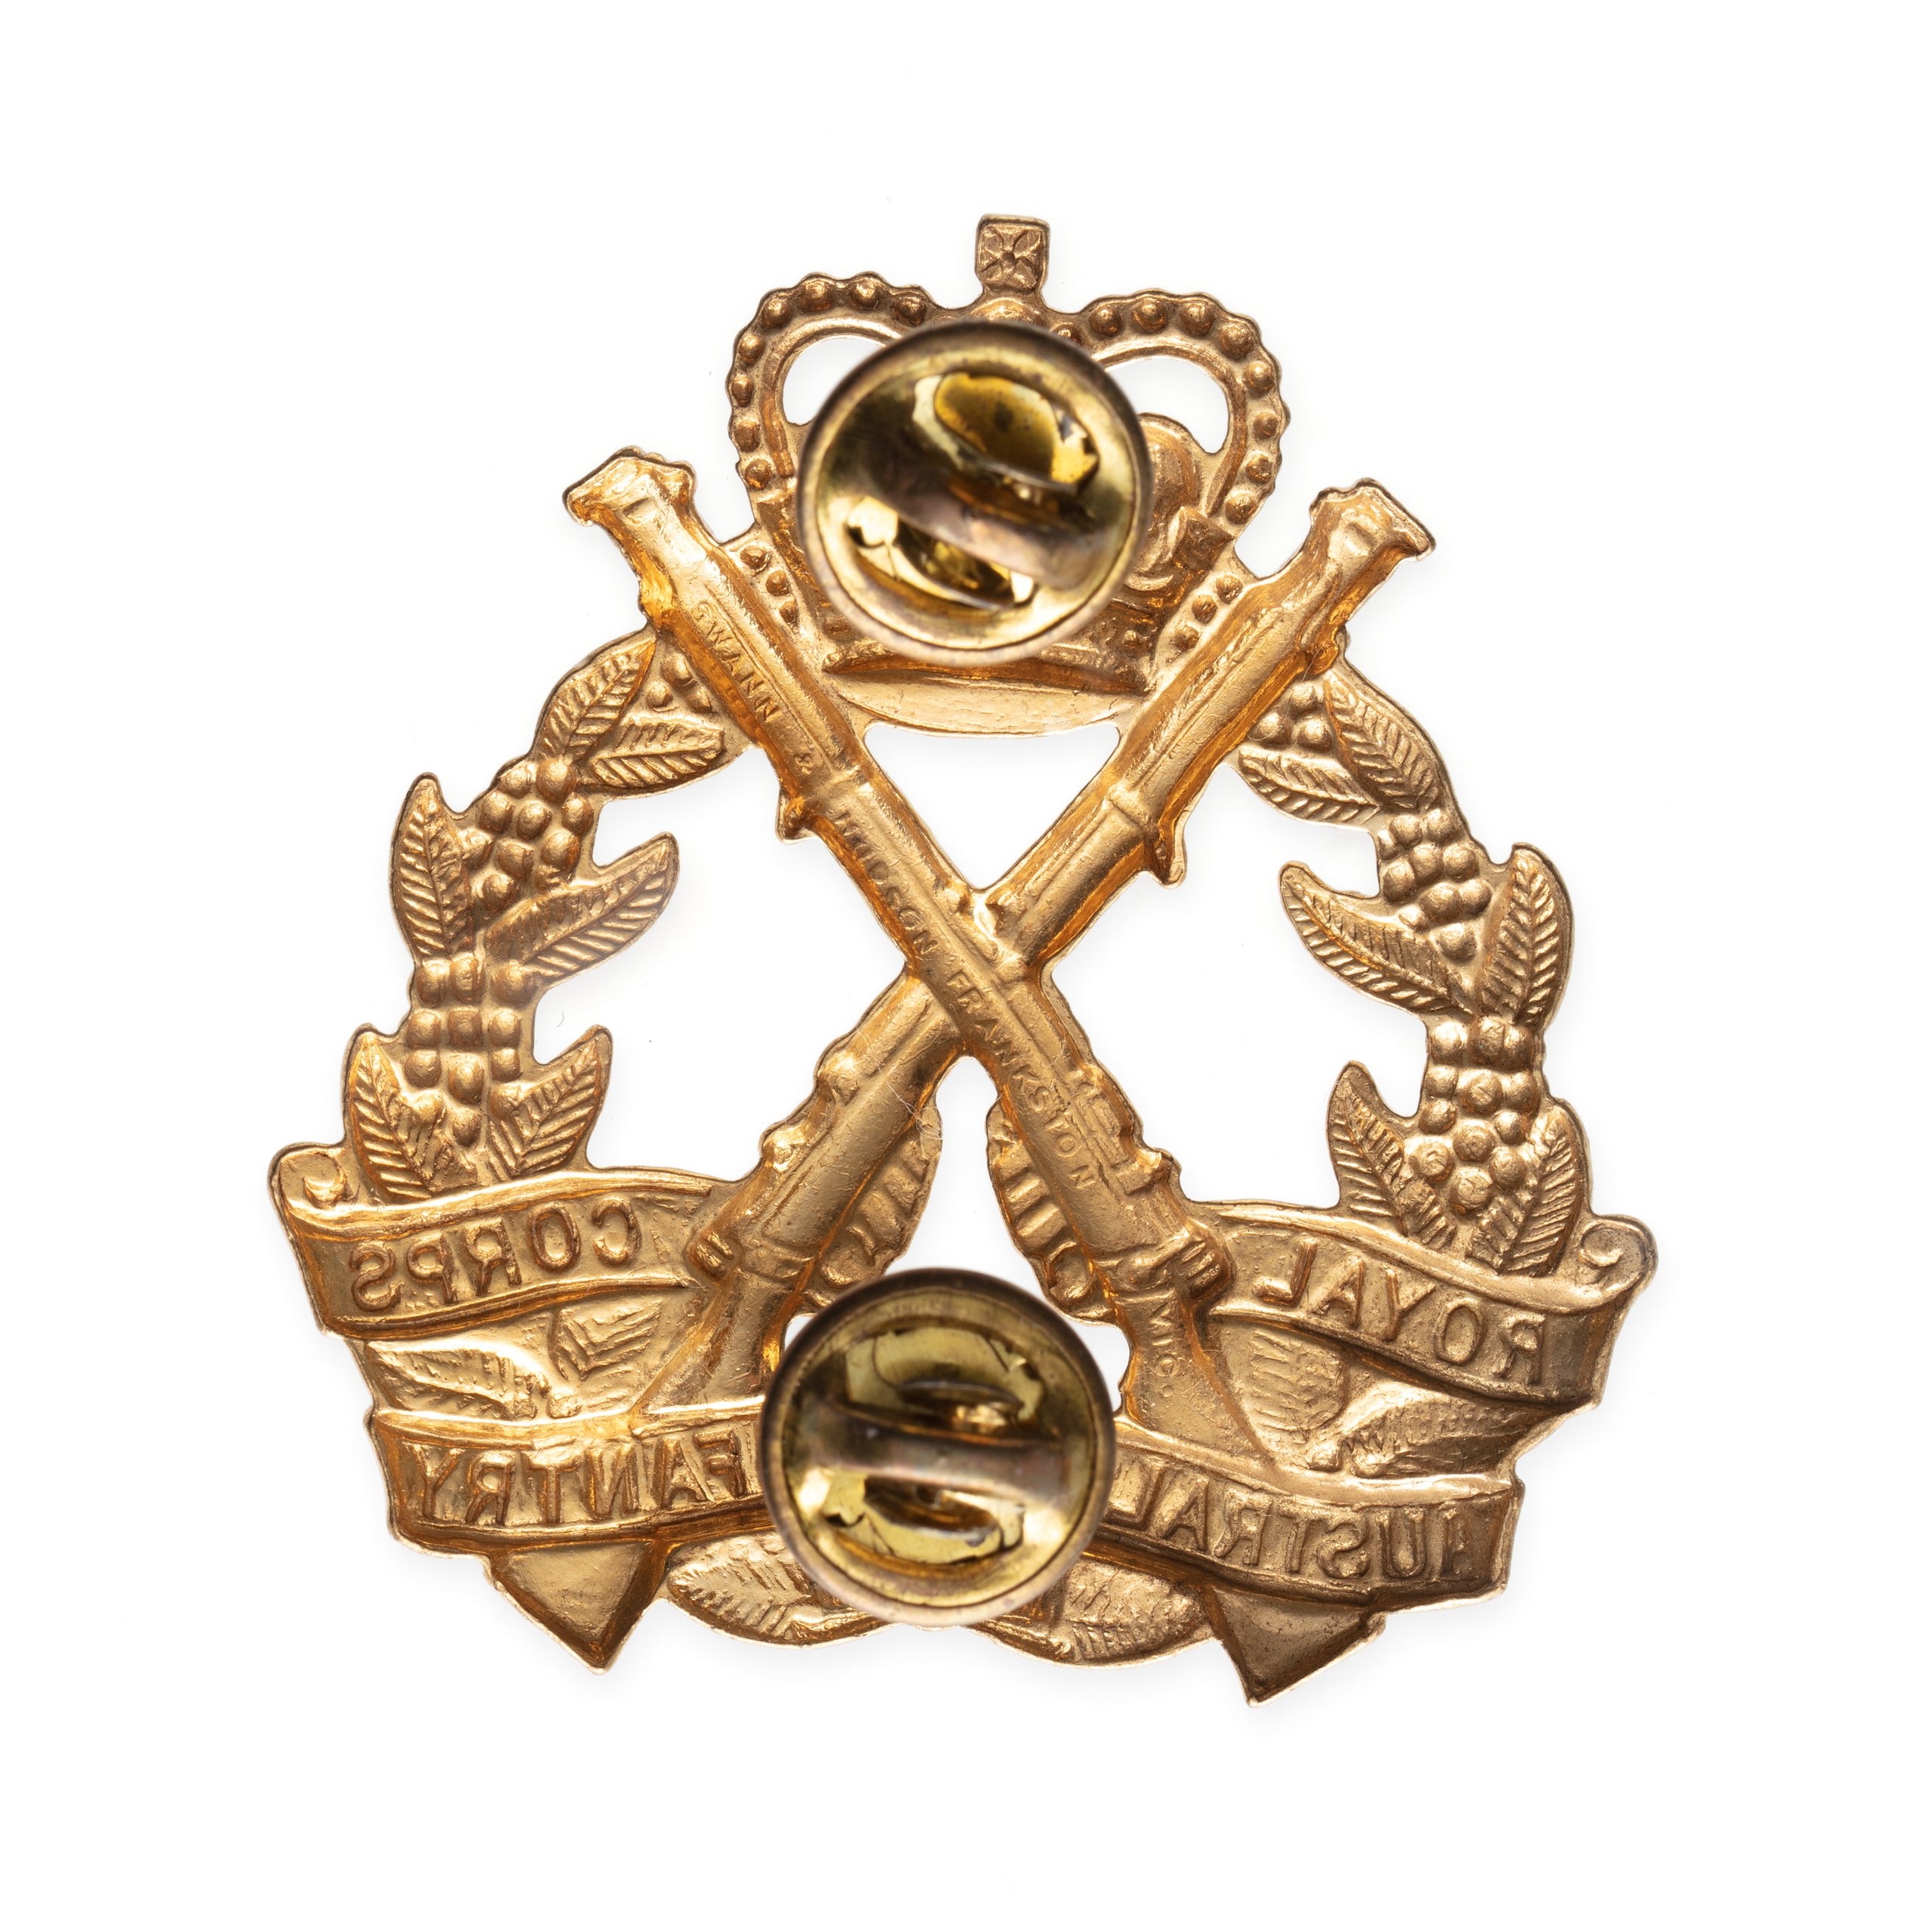 'Royal Australian Infantry Corps' hat badge